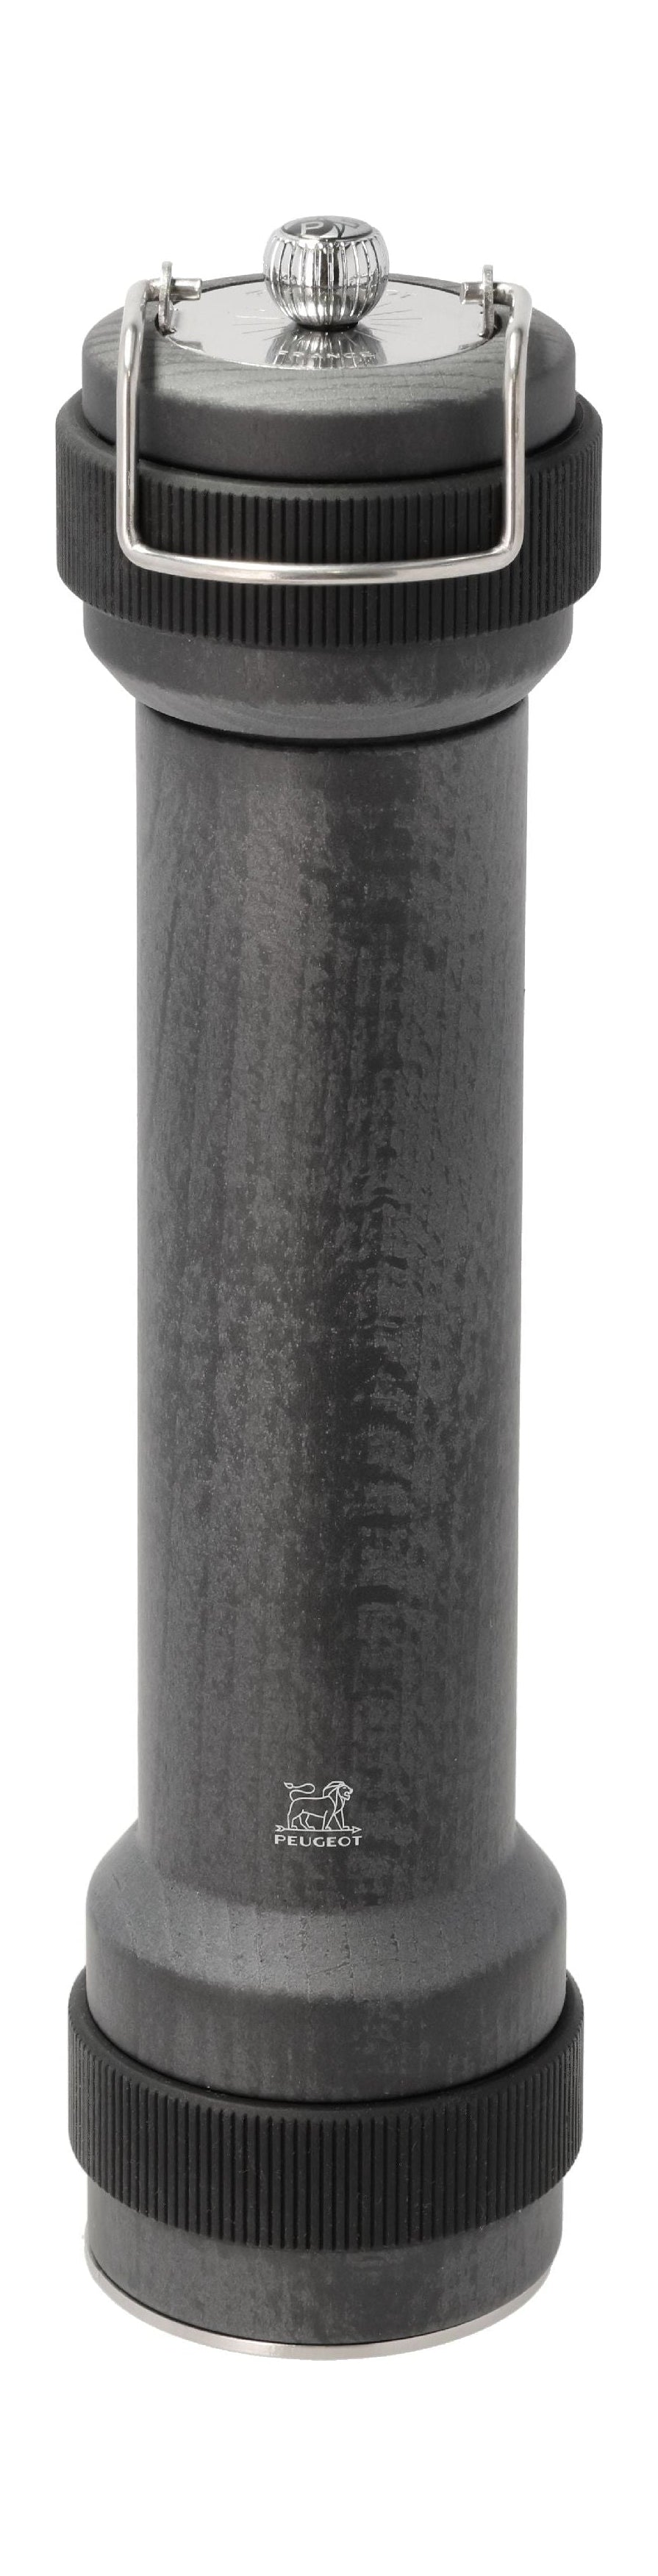 Peugeot BBQ pepe mulino da 30 cm antracite, grigio